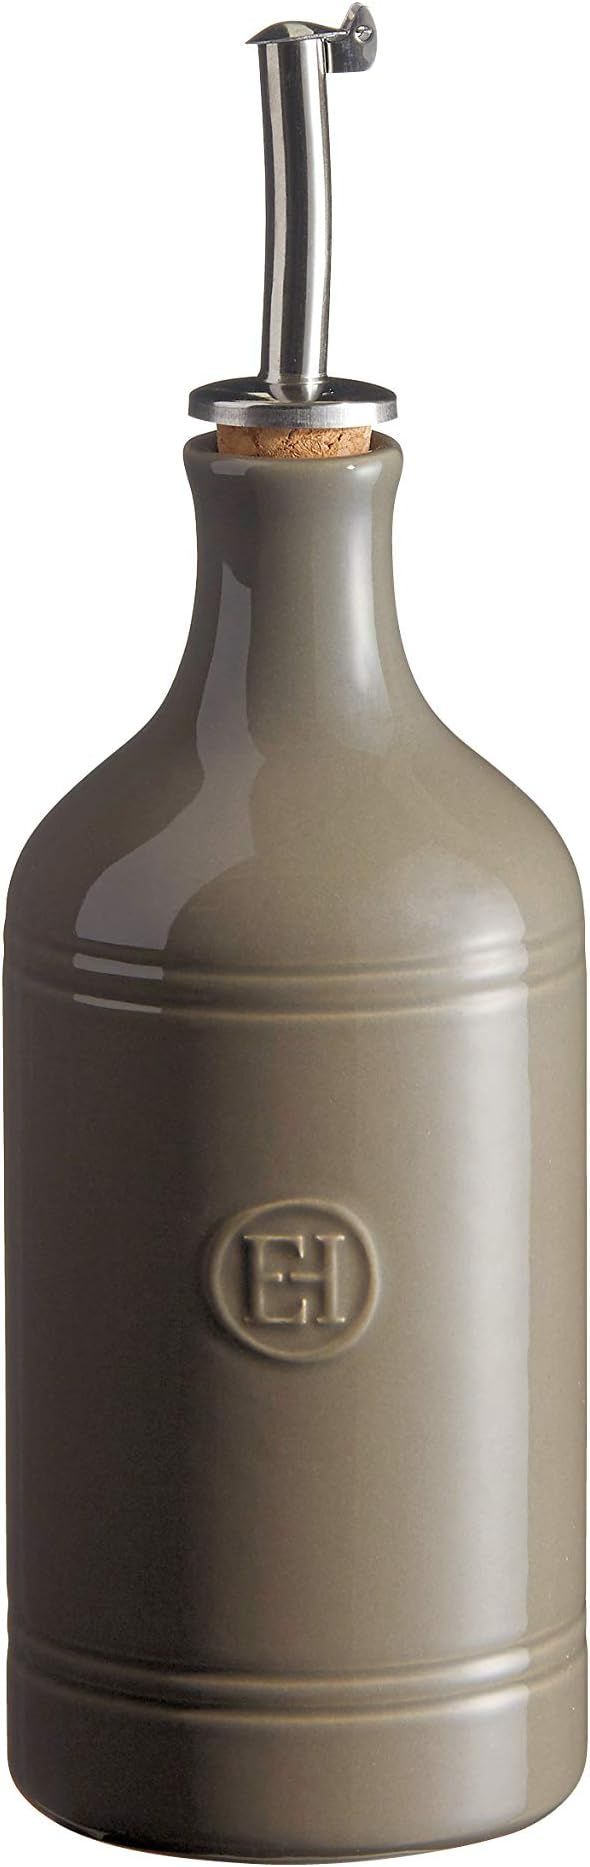 Emile Henry Oil Bottle, Ceramic, Silex, 23 x 16 x 18 cm | Amazon (US)